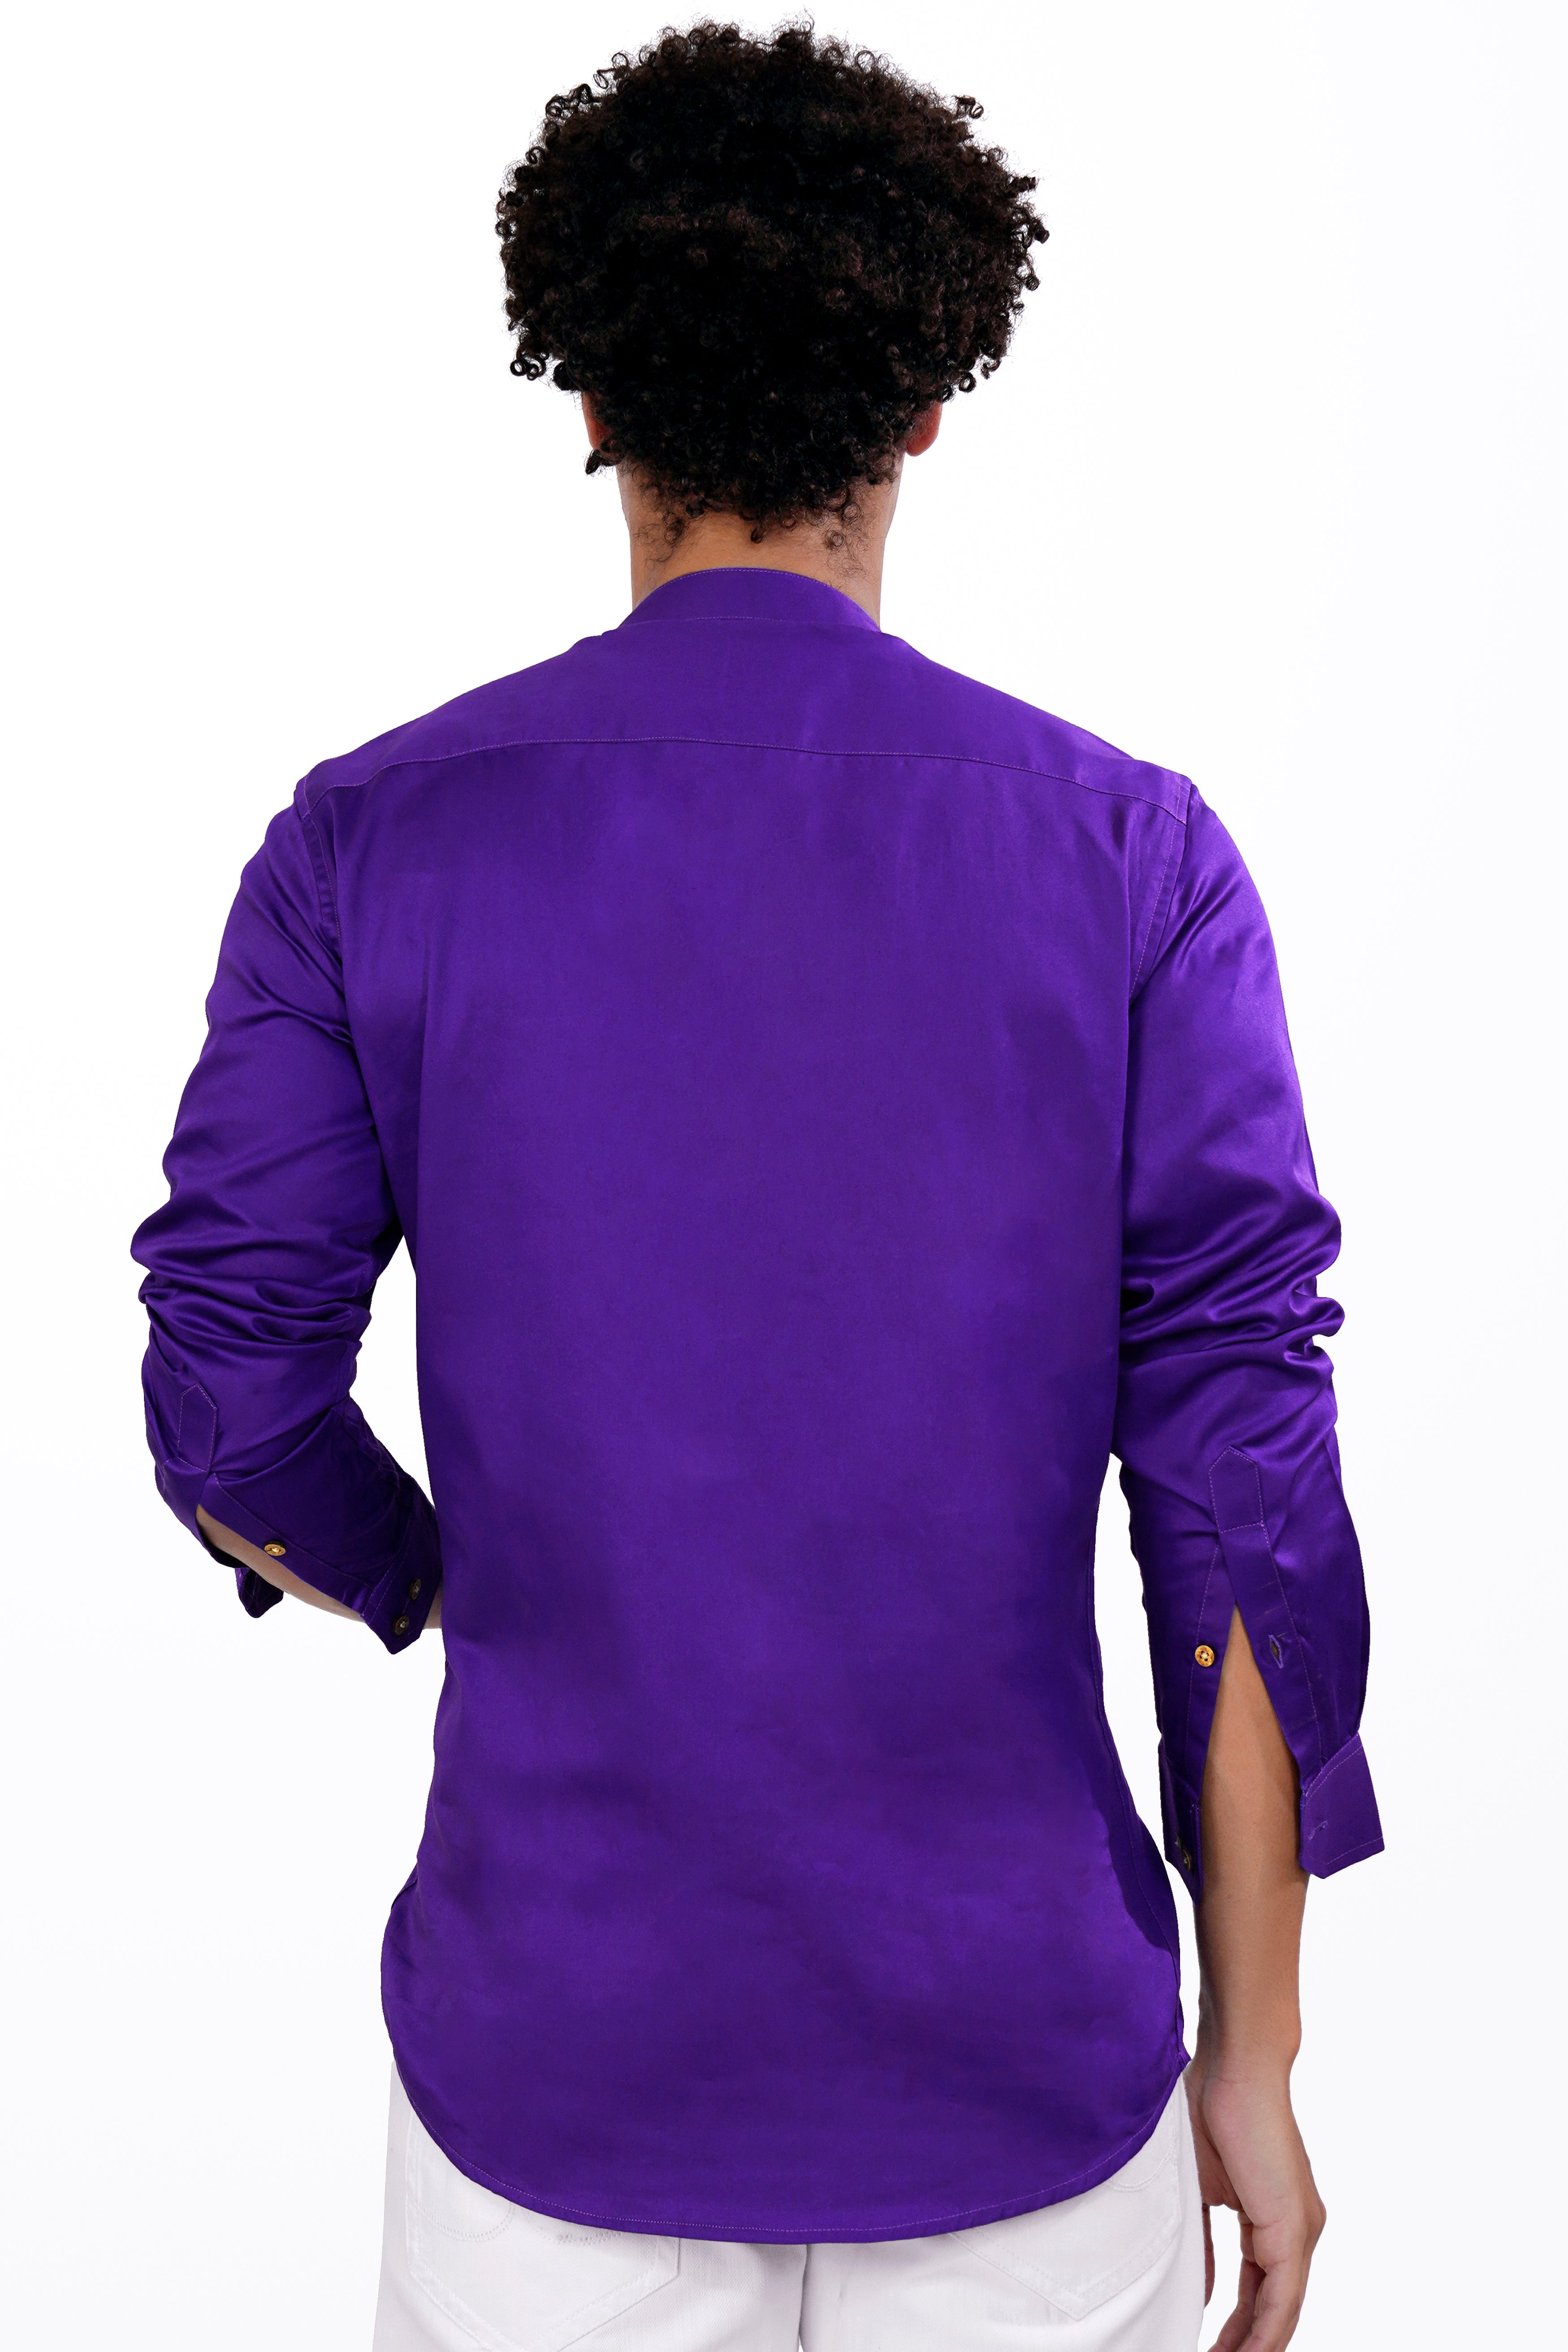 Iris Purple with Golden Hand Painted Super Soft Premium Cotton Designer Kurta Shirt 6422-KS-ART-38, 6422-KS-ART-H-38, 6422-KS-ART-39, 6422-KS-ART-H-39, 6422-KS-ART-40, 6422-KS-ART-H-40, 6422-KS-ART-42, 6422-KS-ART-H-42, 6422-KS-ART-44, 6422-KS-ART-H-44, 6422-KS-ART-46, 6422-KS-ART-H-46, 6422-KS-ART-48, 6422-KS-ART-H-48, 6422-KS-ART-50, 6422-KS-ART-H-50, 6422-KS-ART-52, 6422-KS-ART-H-52